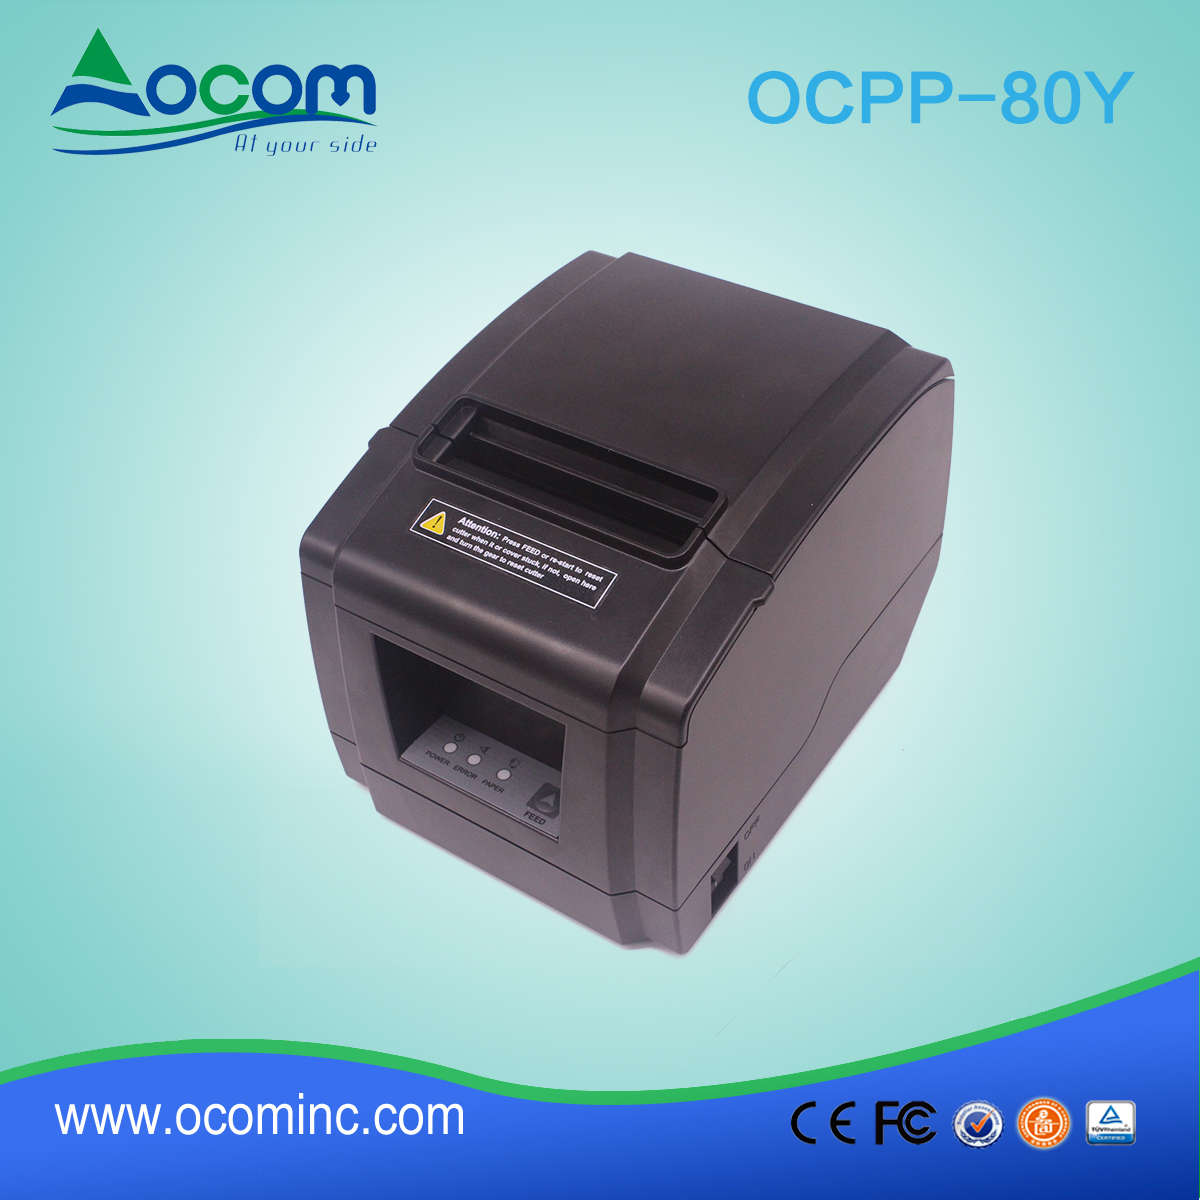 Nowy model OCPP-80Y 80mm drukarka termiczna z usb & Auto Cutter